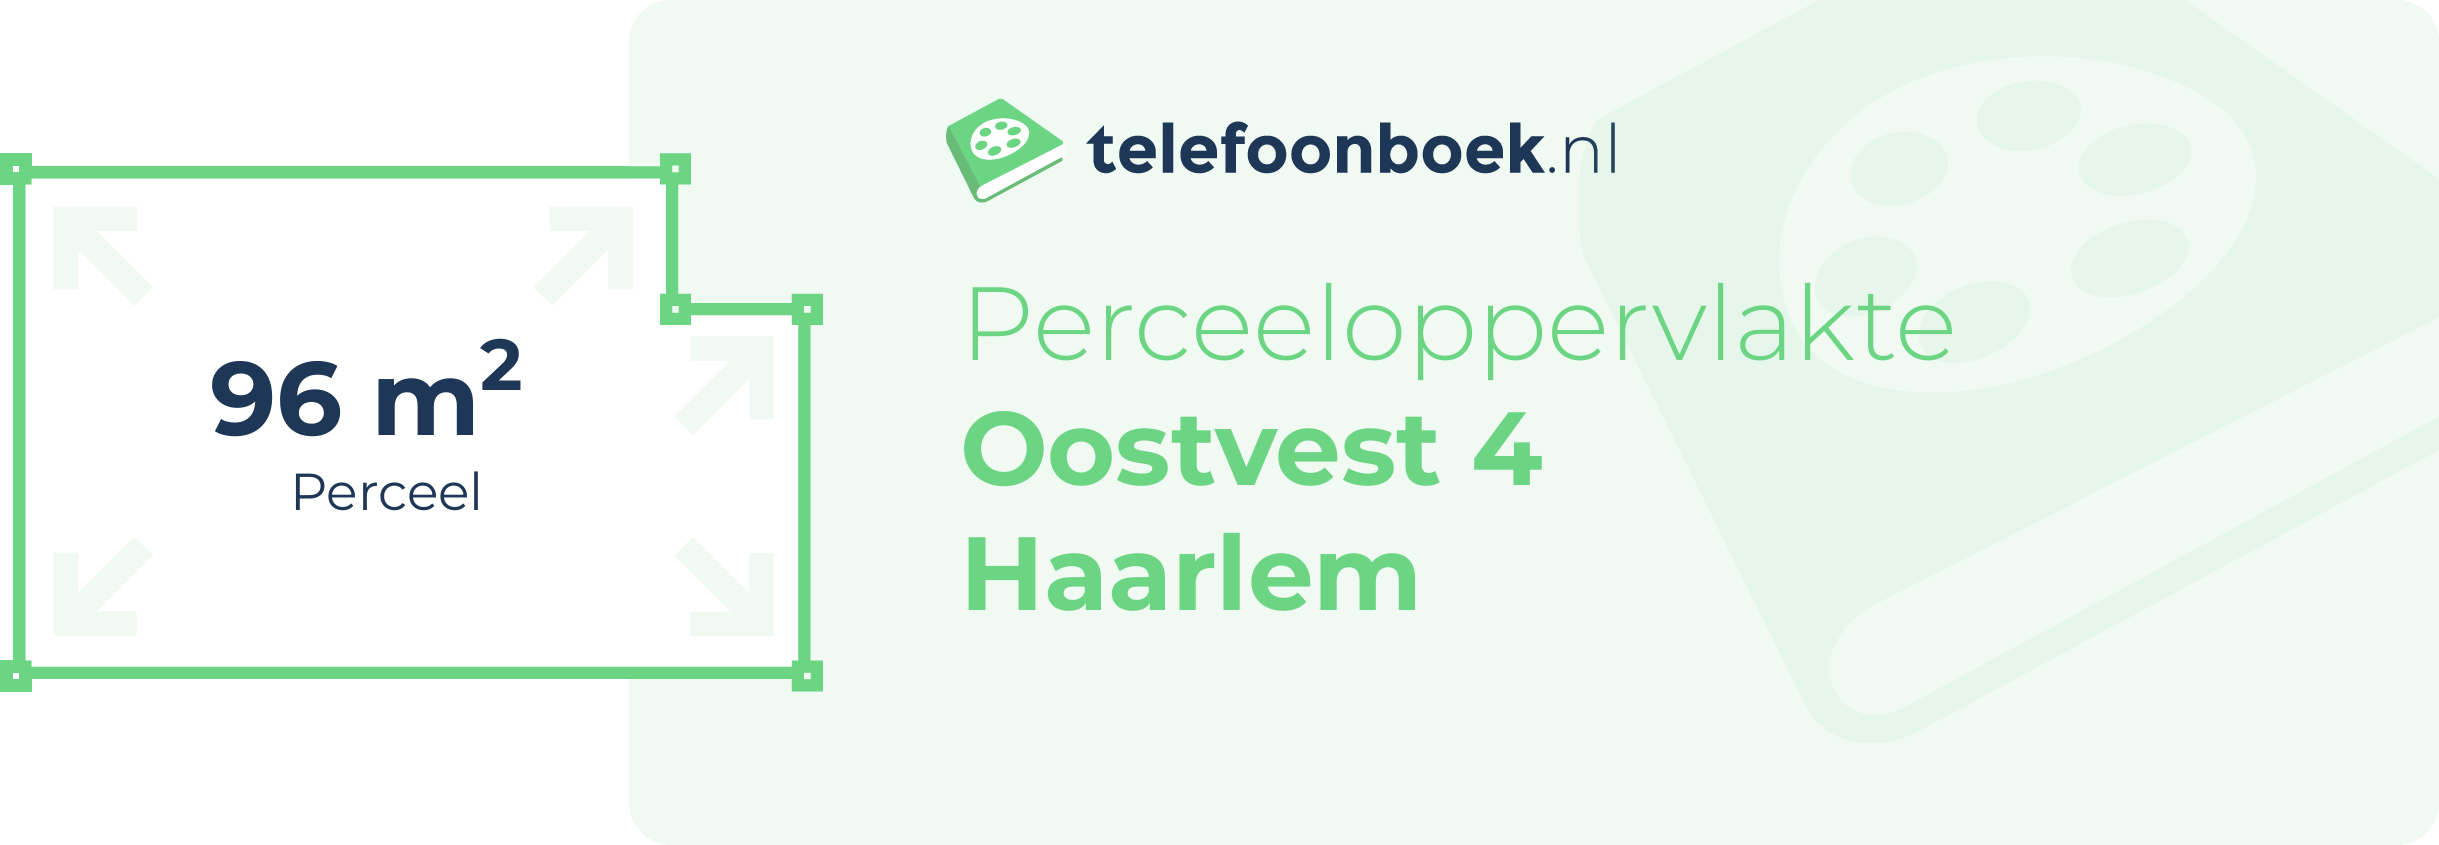 Perceeloppervlakte Oostvest 4 Haarlem